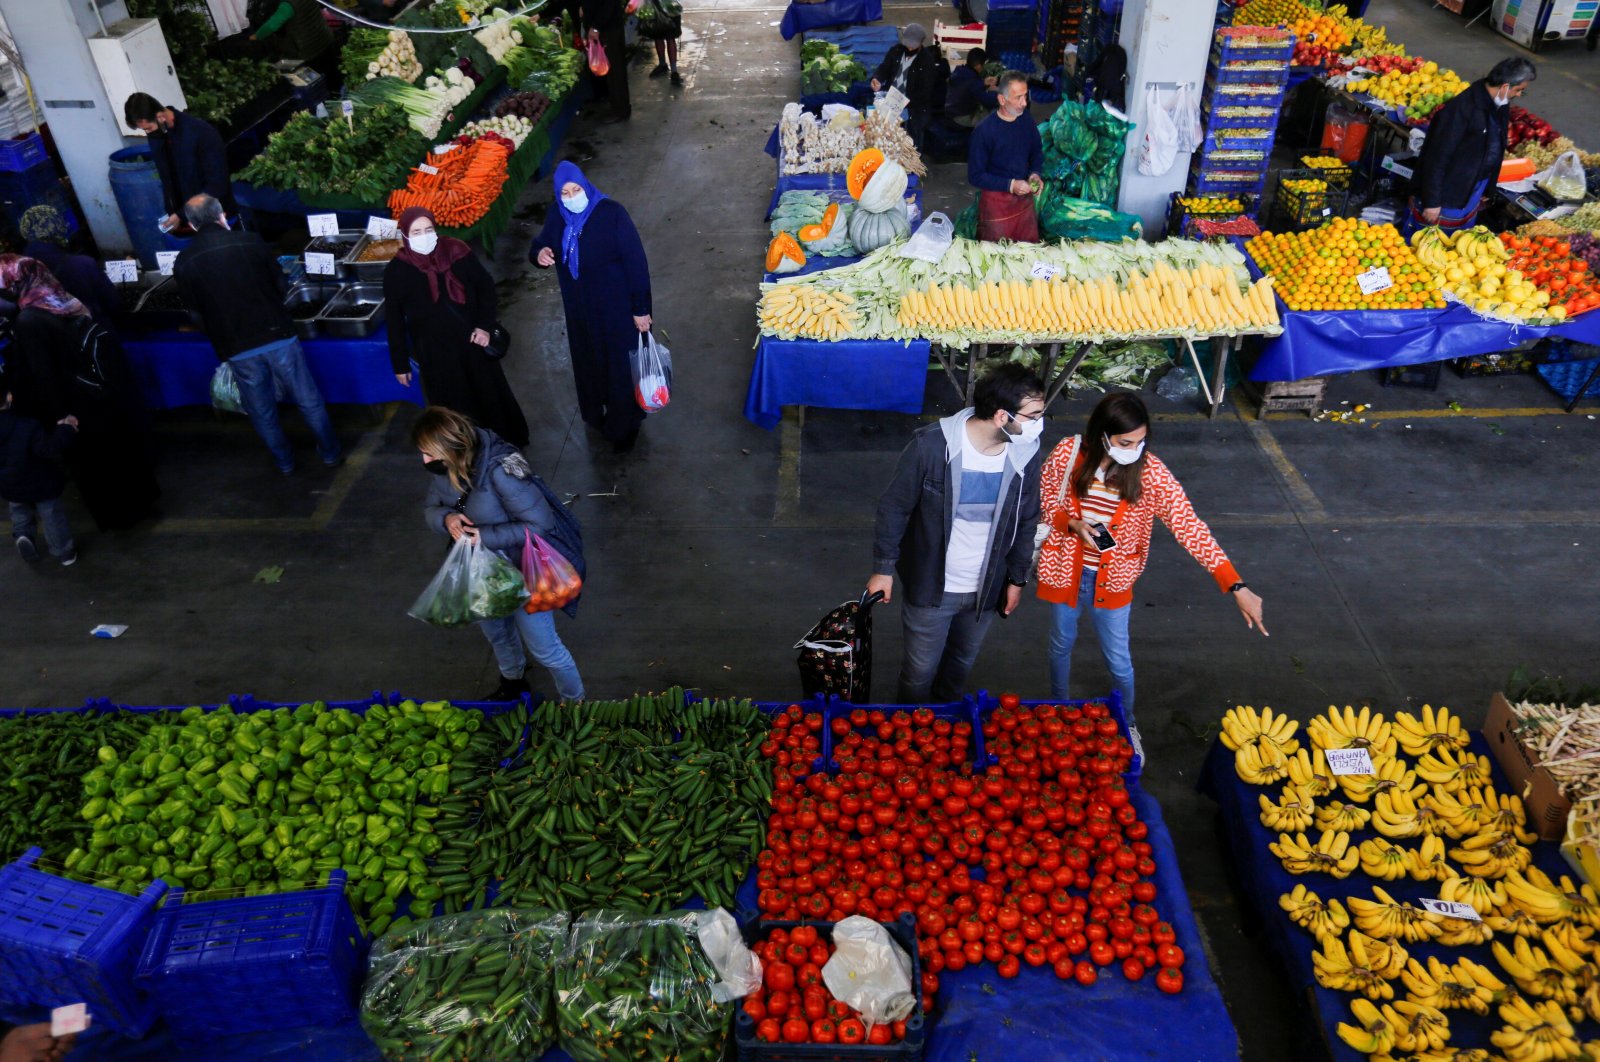 People shop in a bazaar in Istanbul, Turkey, Oct. 26, 2021. (Reuters Photo)